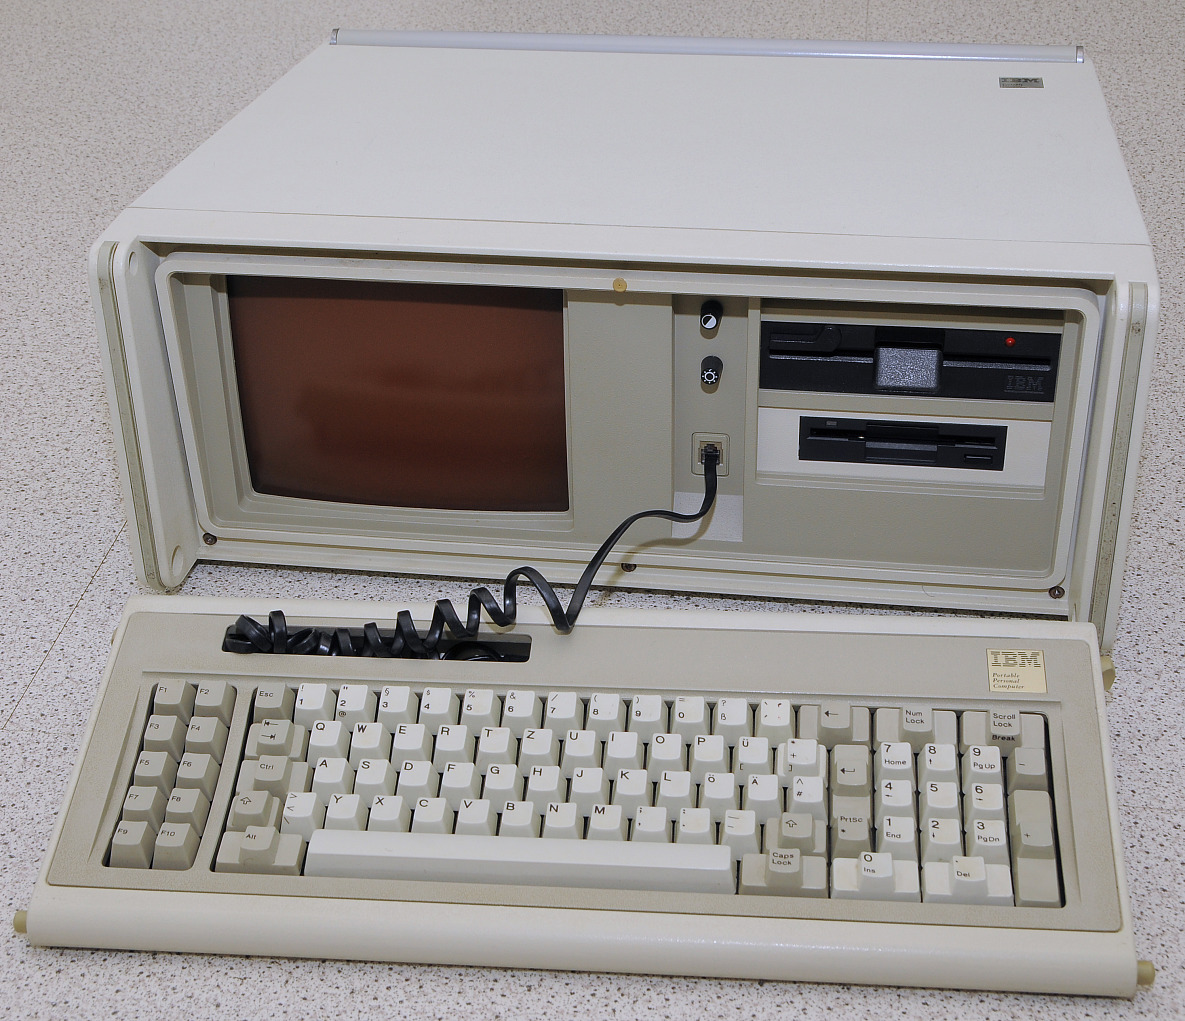 IBM 5155 computer 4b0c5 s1185x1021